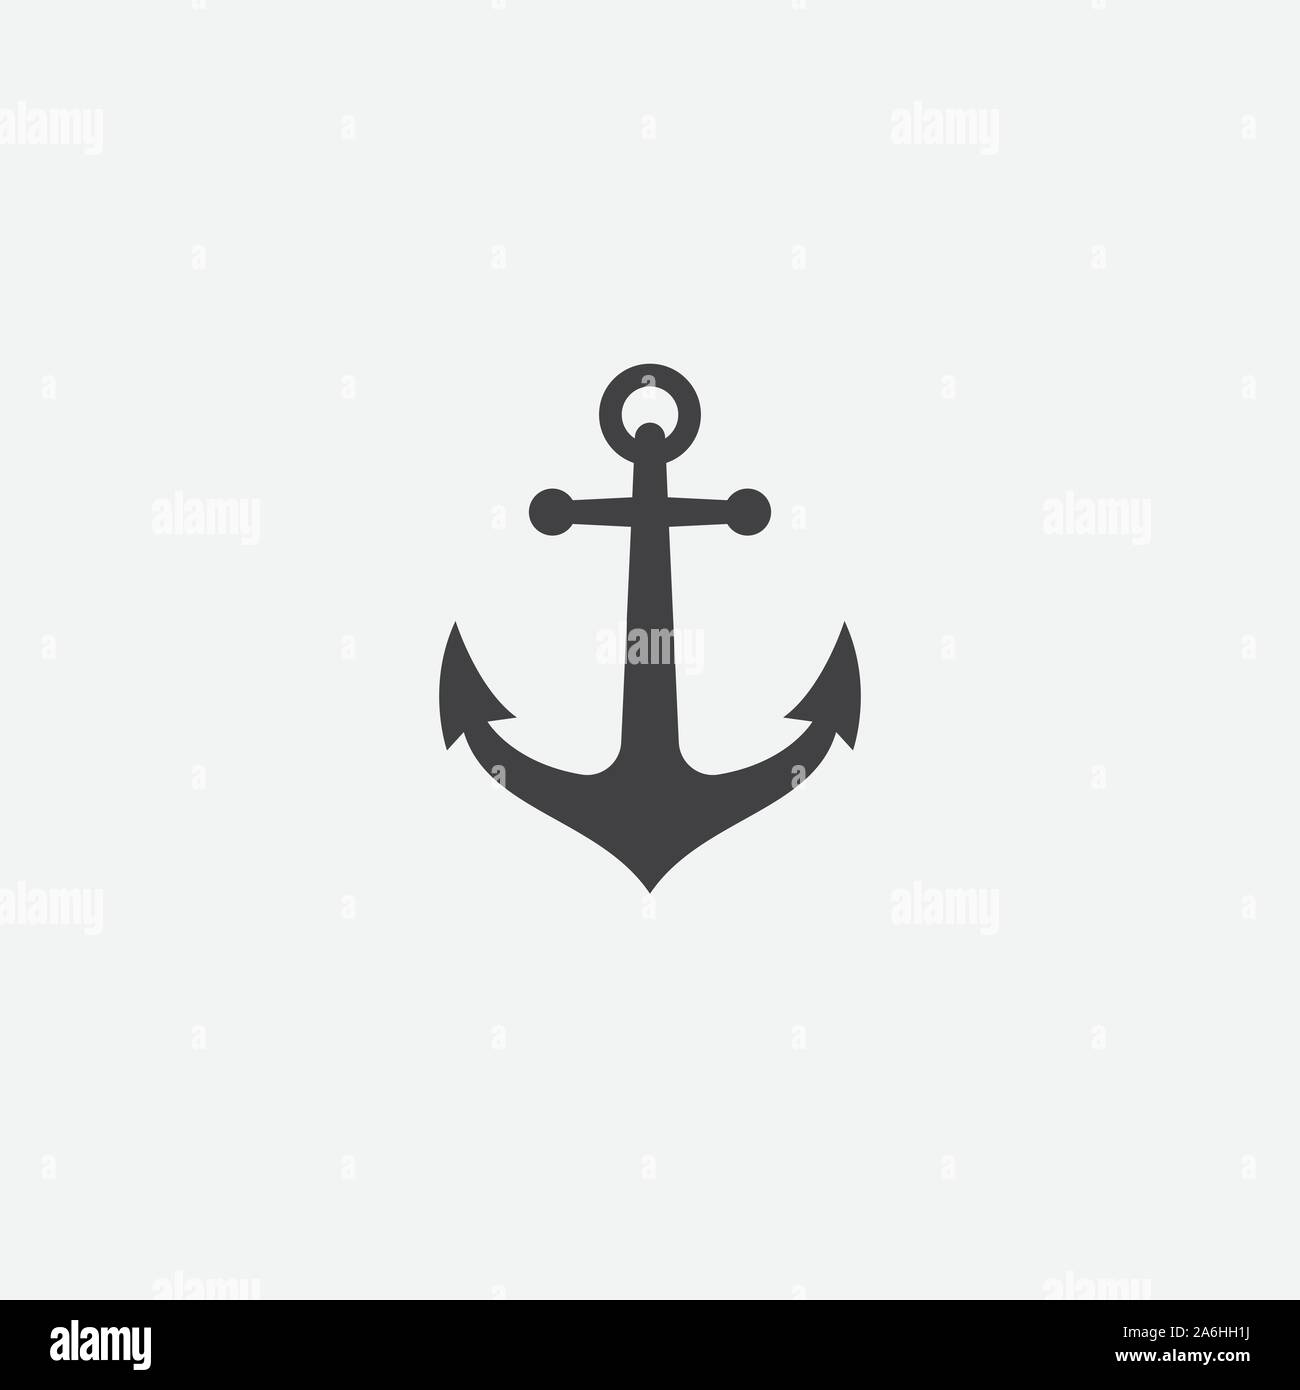 https://c8.alamy.com/compes/2a6hh1j/icono-de-vector-logo-de-anclaje-nautica-maritima-mar-oceano-en-barco-simbolo-de-la-ilustracion-vectorial-el-icono-de-ancla-maritimo-nautico-barco-pirata-icono-de-ancla-icono-vectoriales-sencillos-2a6hh1j.jpg